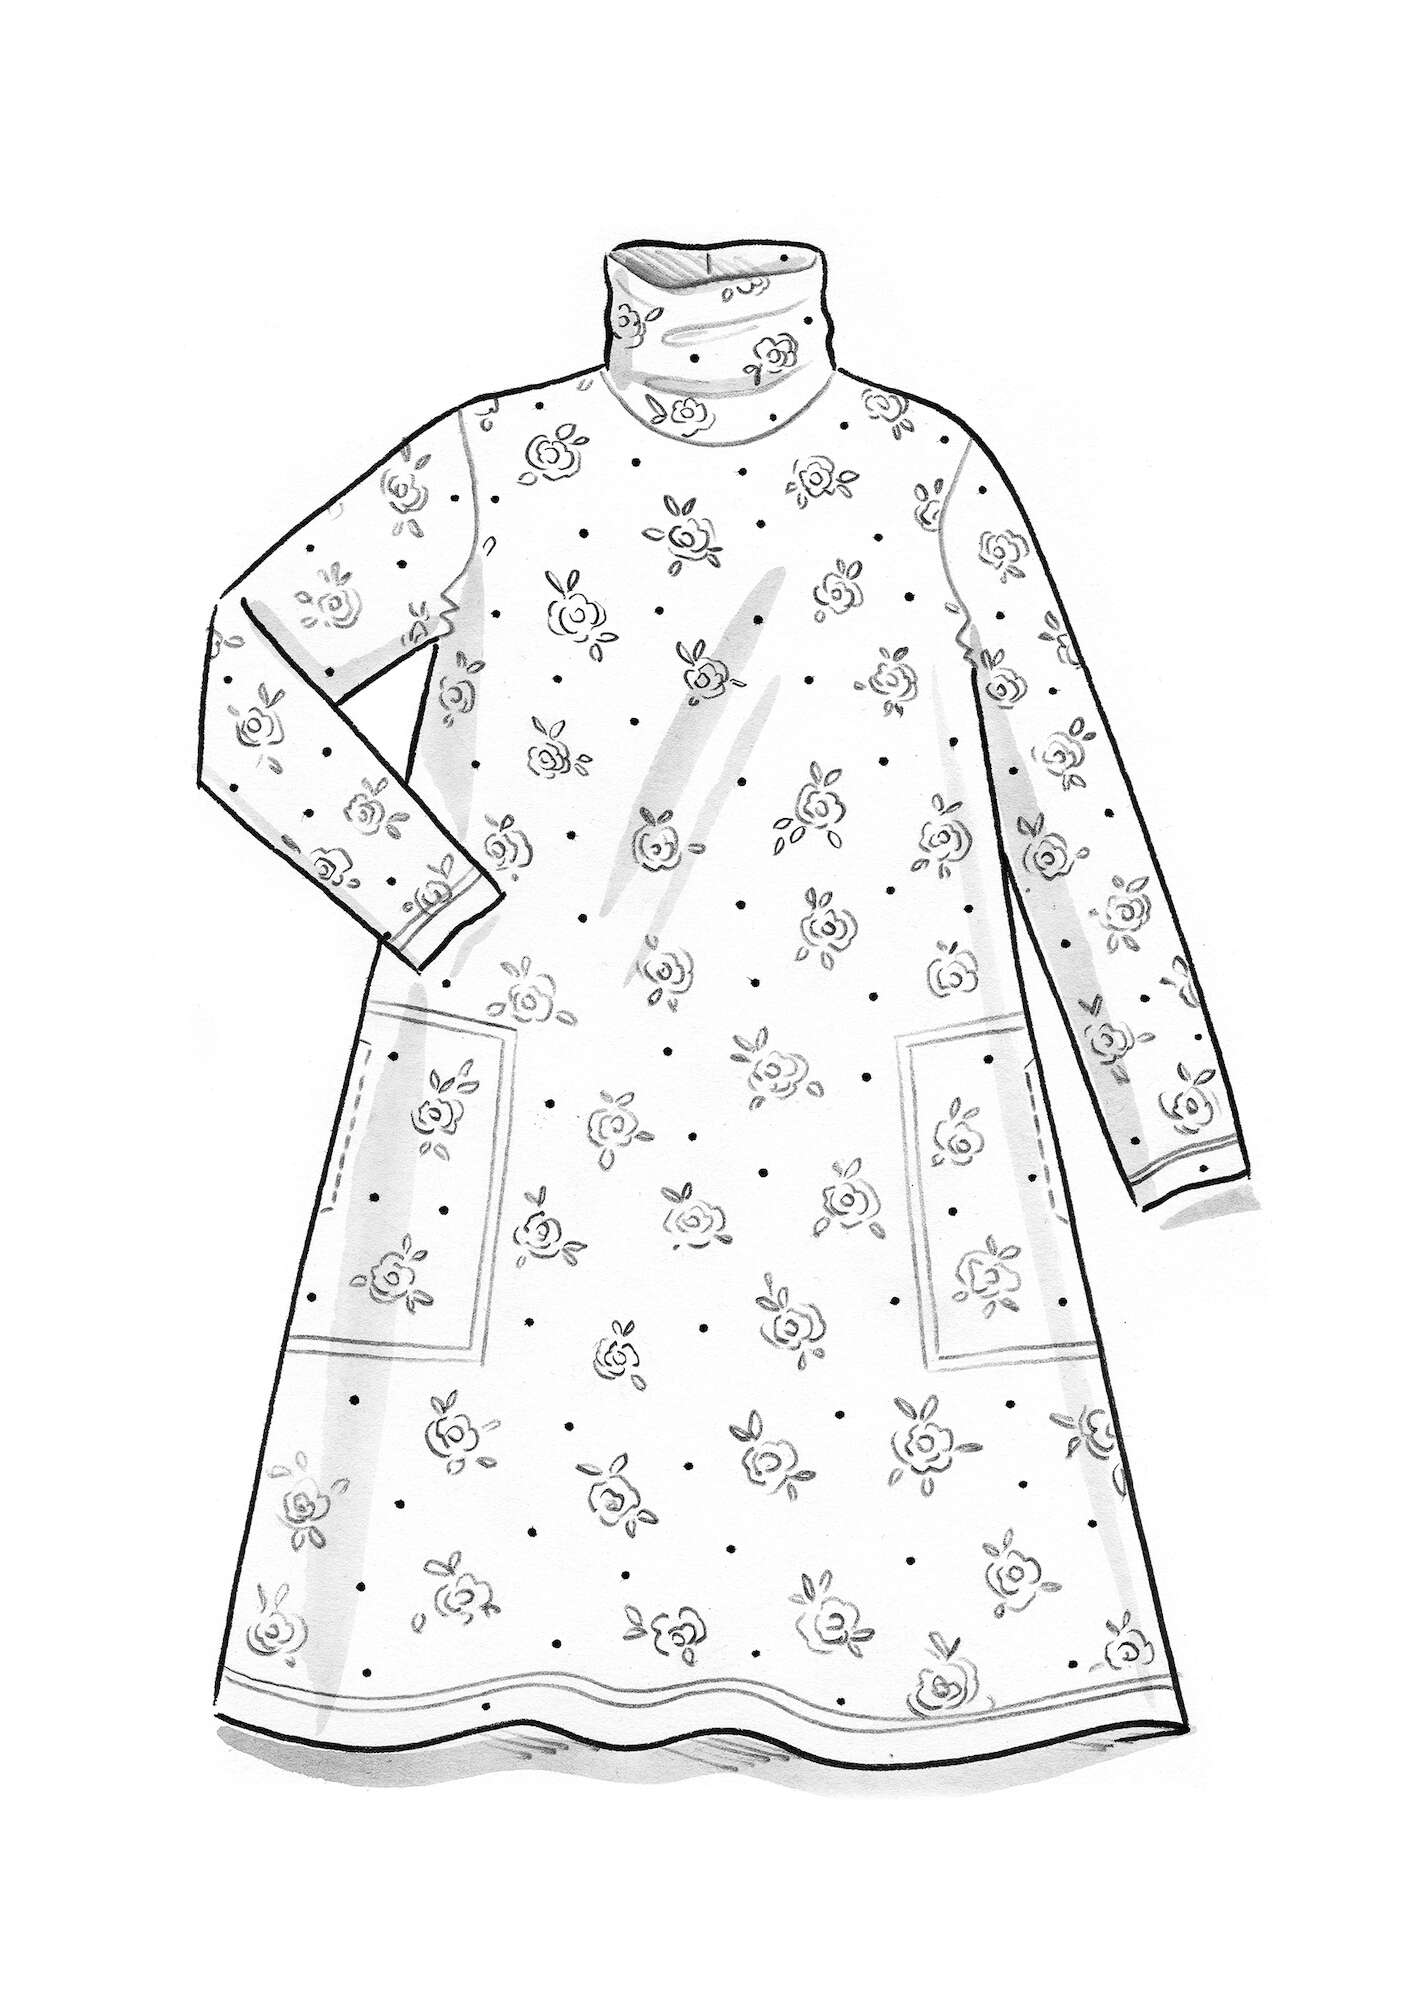 Tricot jurk  Öland  van lyocell/elastaan allium/dessin